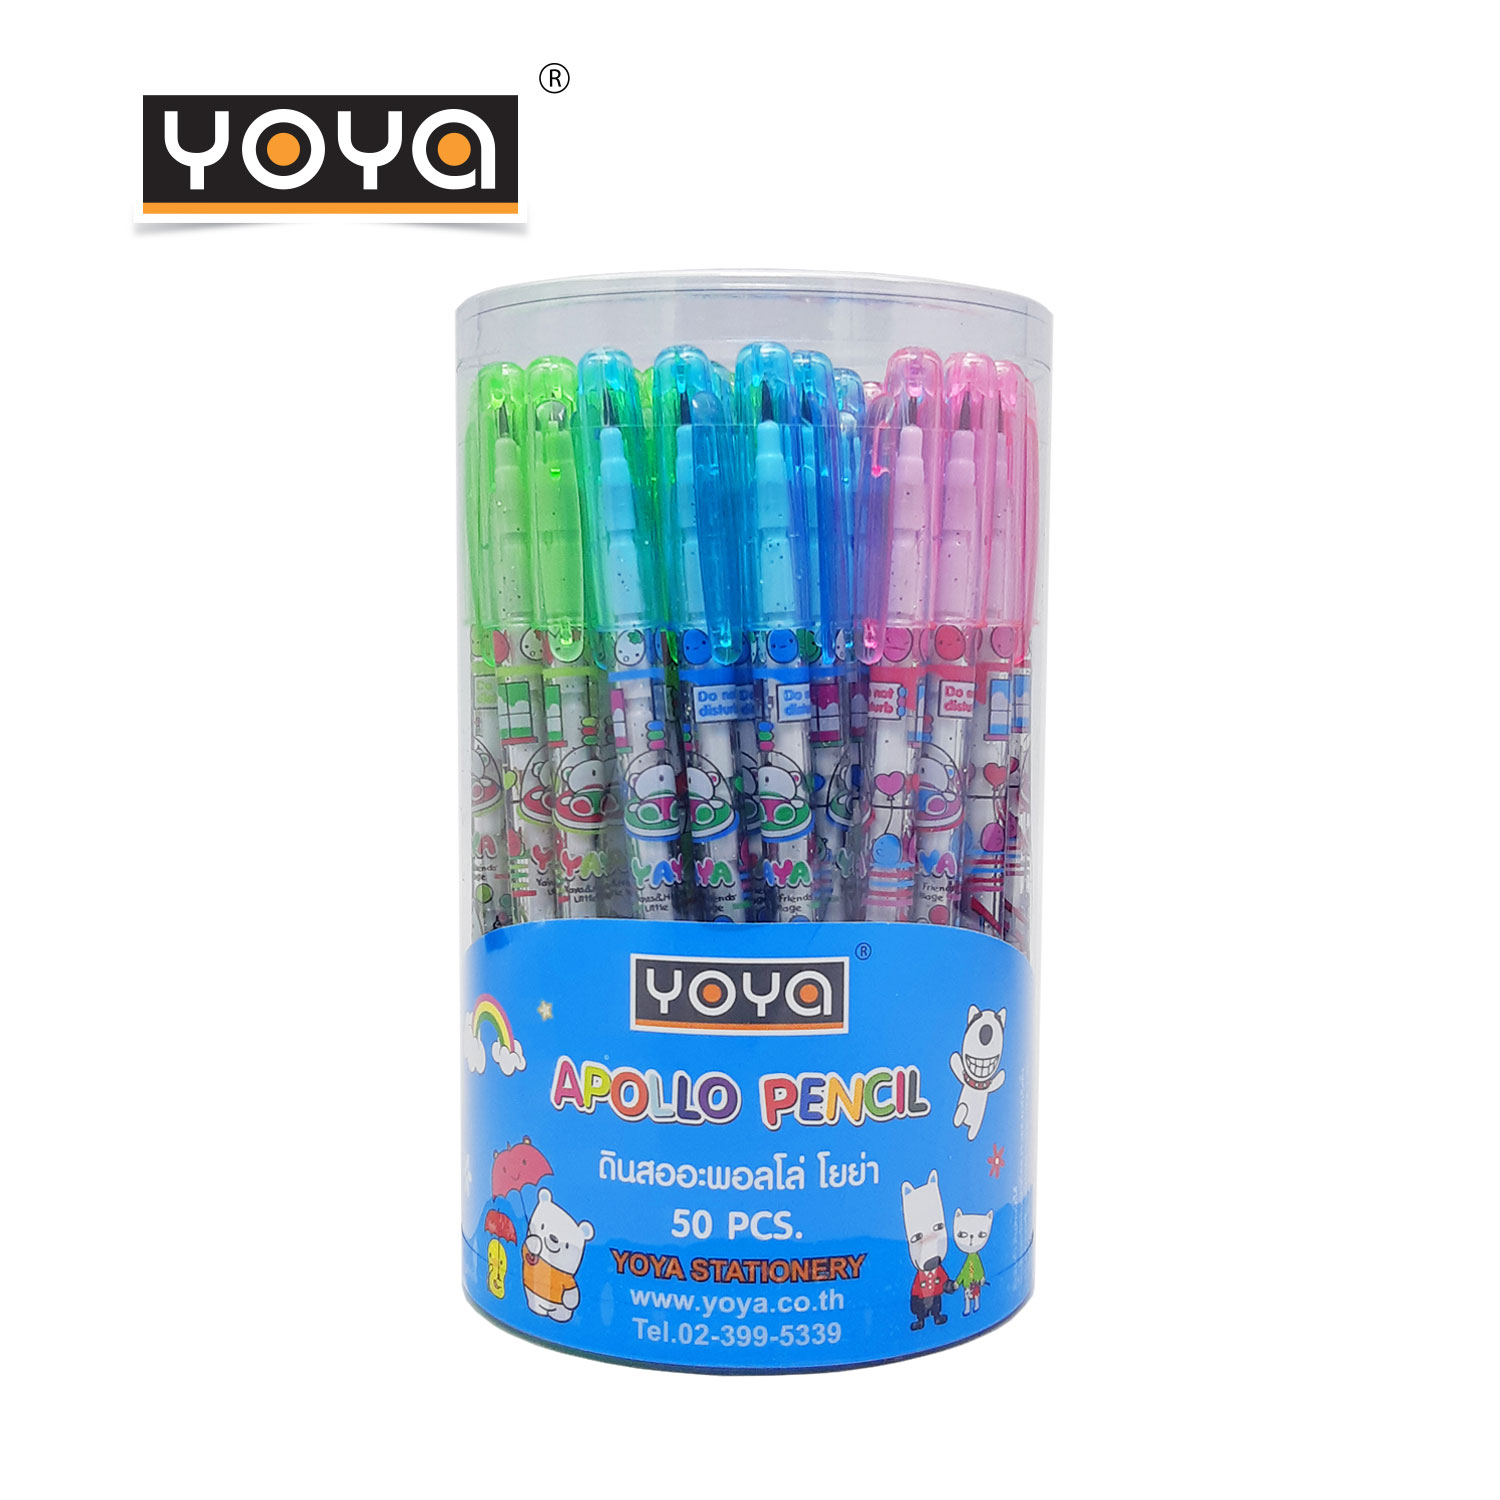 YOYA 2B-Apllo Pencil Pack 50 : MODEL-1